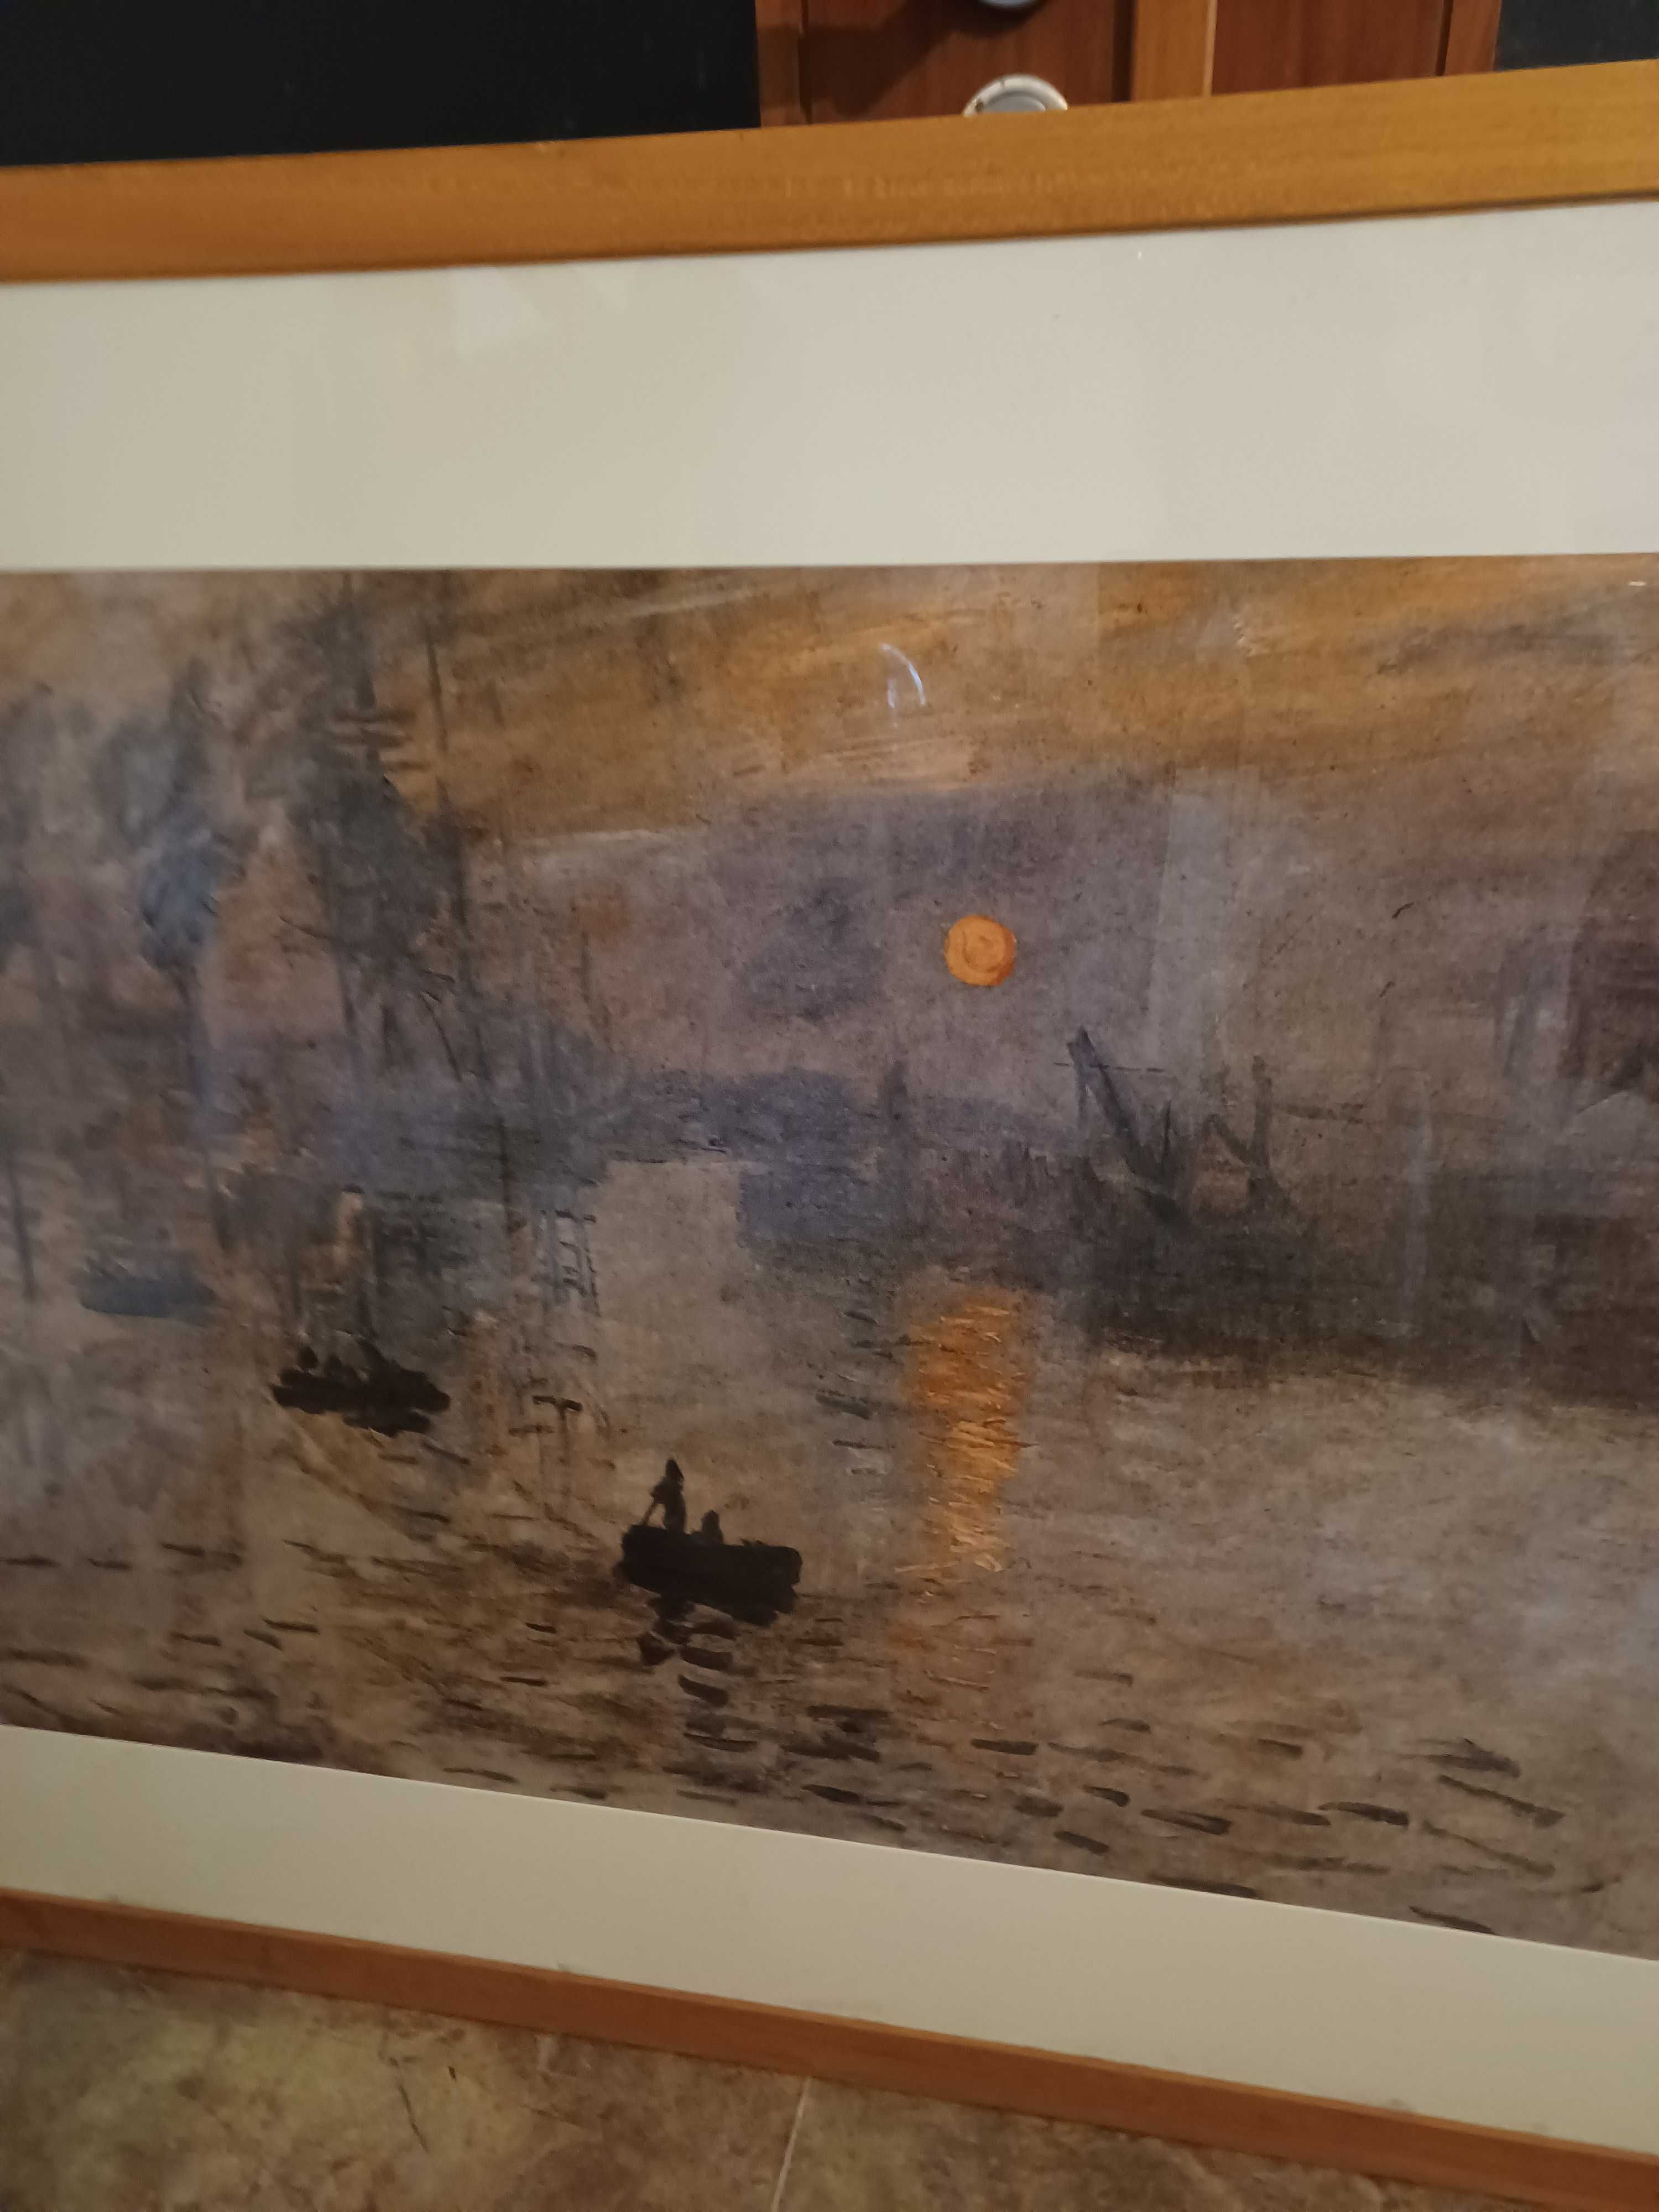 Quadro de Claude Monet -(Famoso- IMPRESSIONISTA)